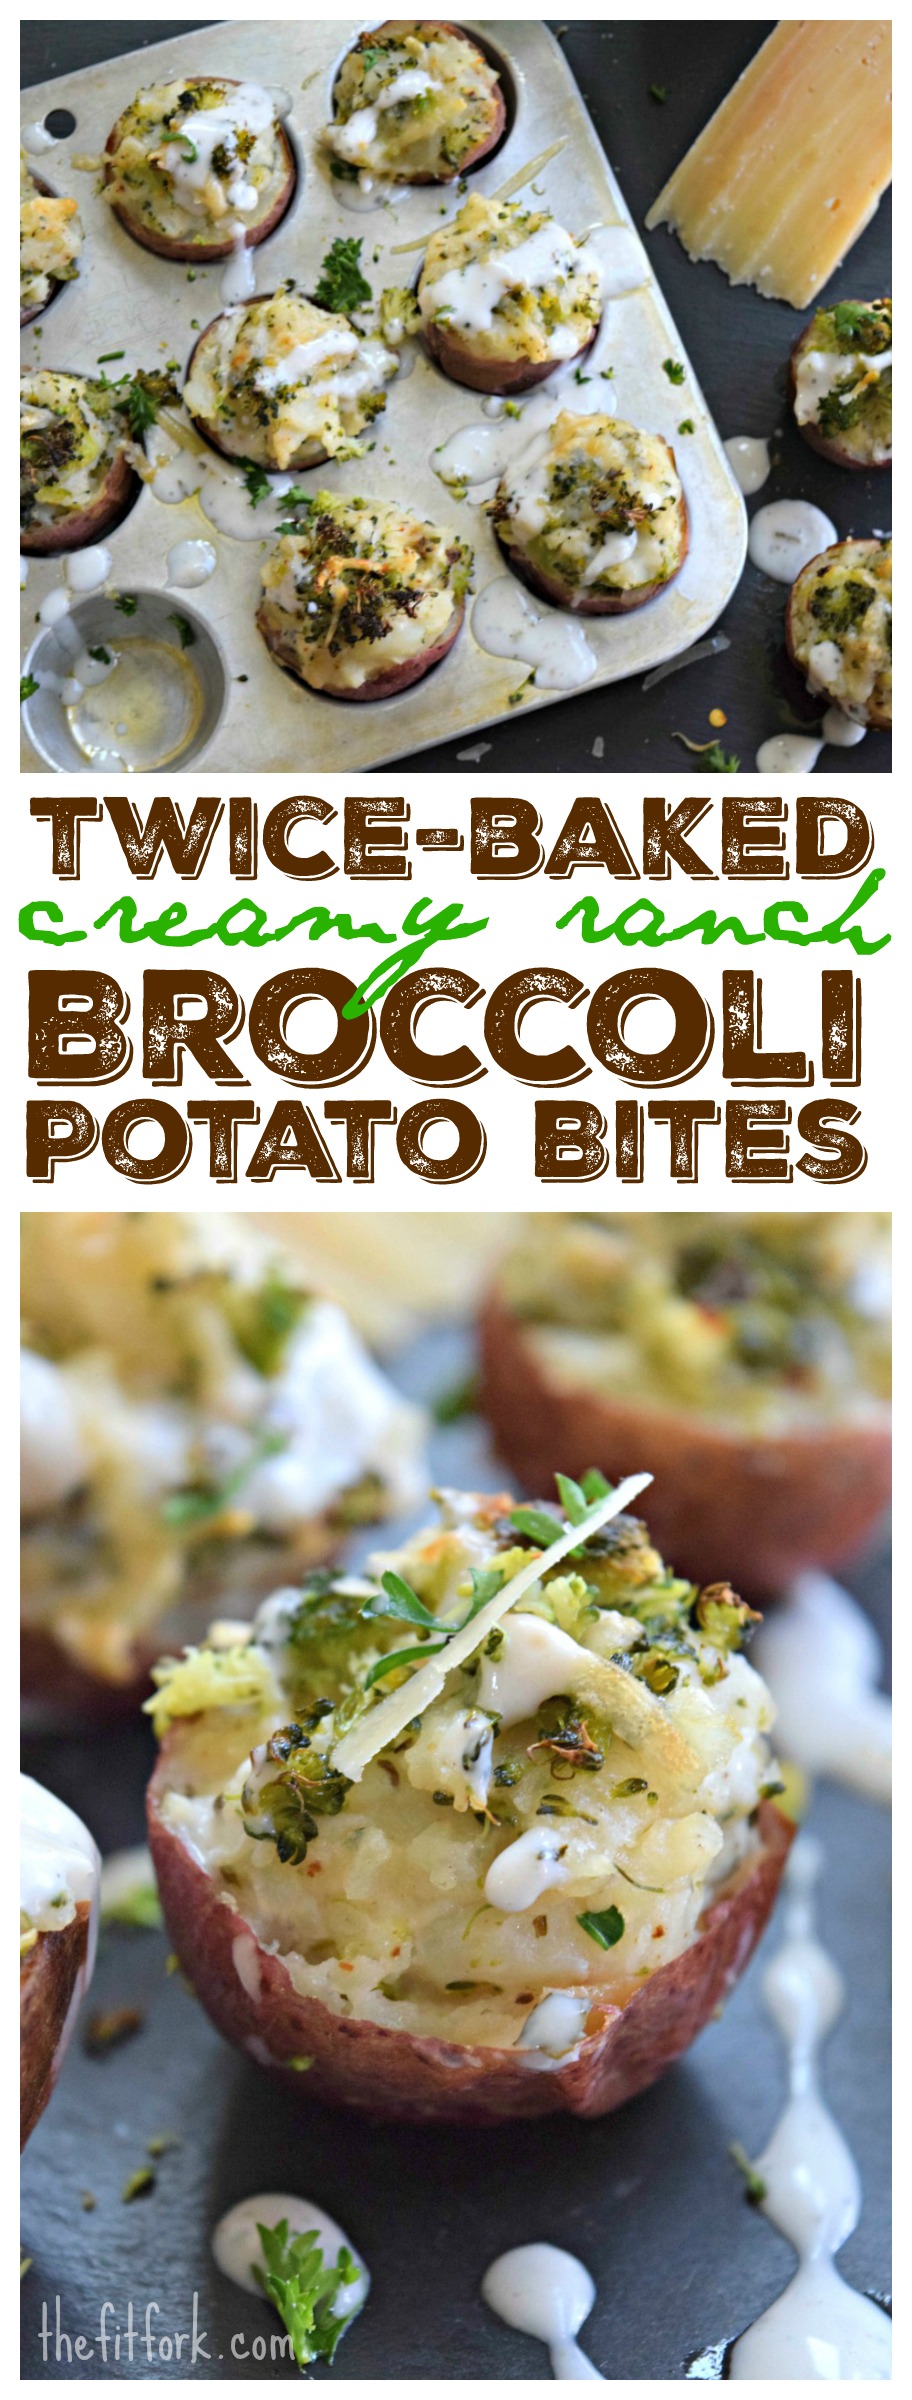 Twice Baked Creamy Ranch Broccoli Potato Bites | thefitfork.com